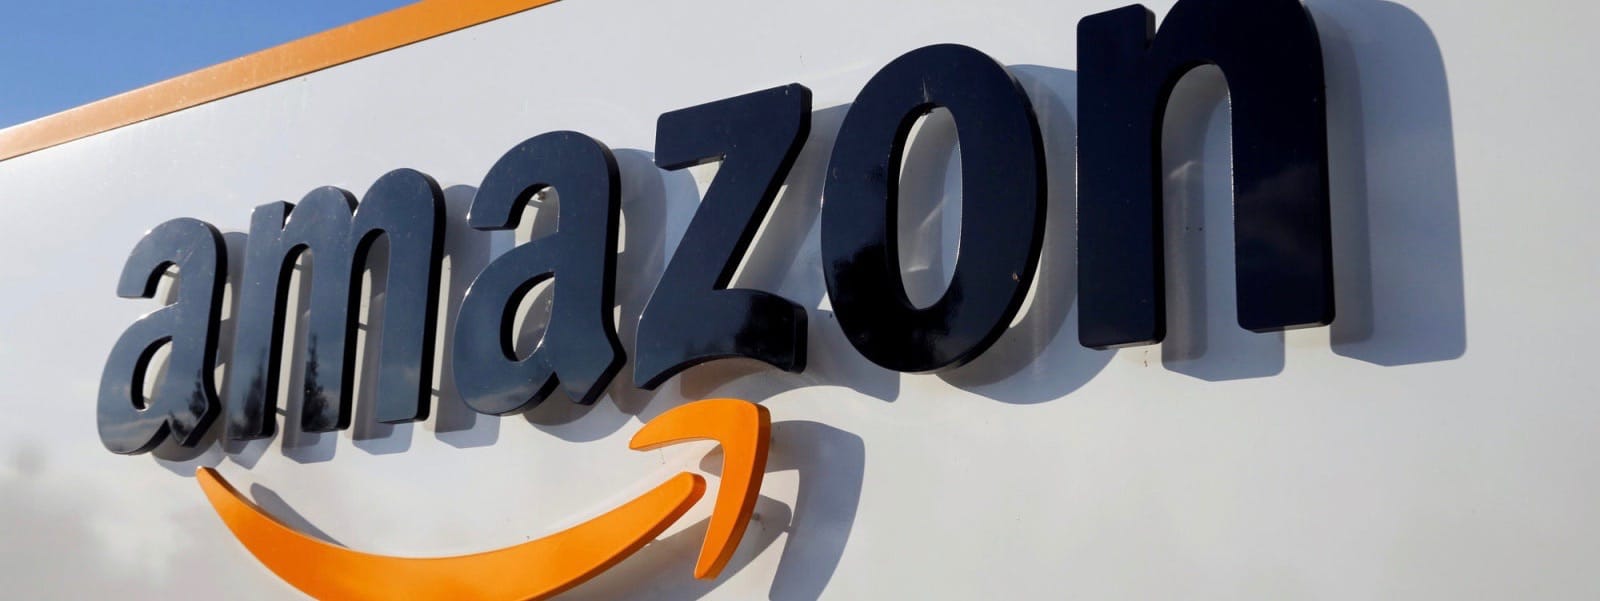 Amazon hopes new wage increases will quash “sweatshop” reputational slams